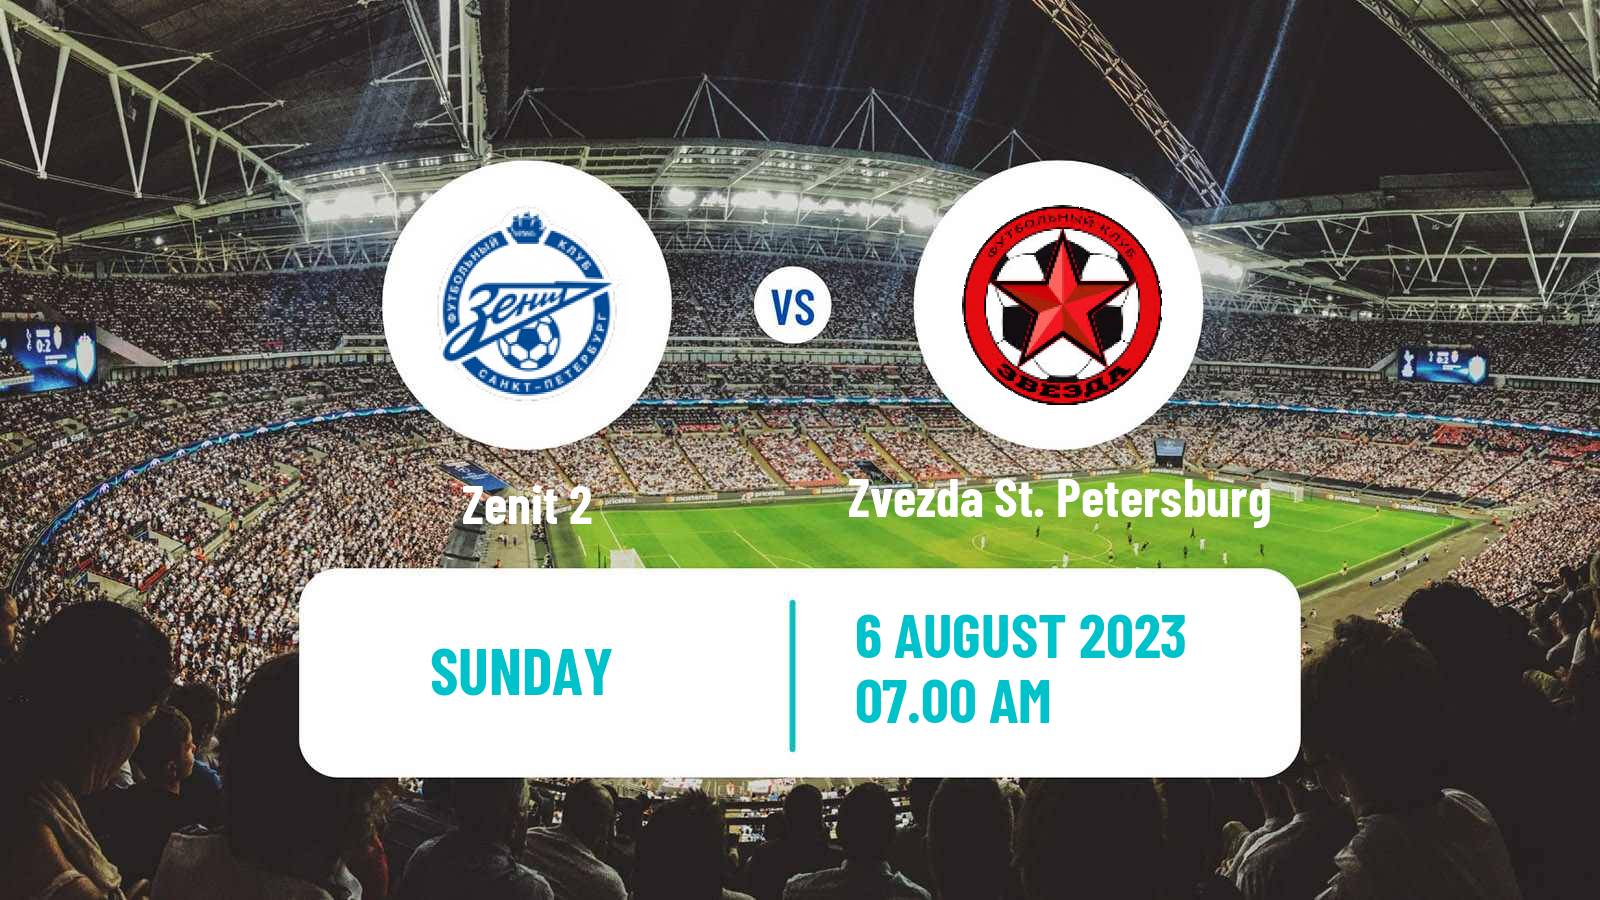 Soccer FNL 2 Division B Group 2 Zenit 2 - Zvezda St. Petersburg